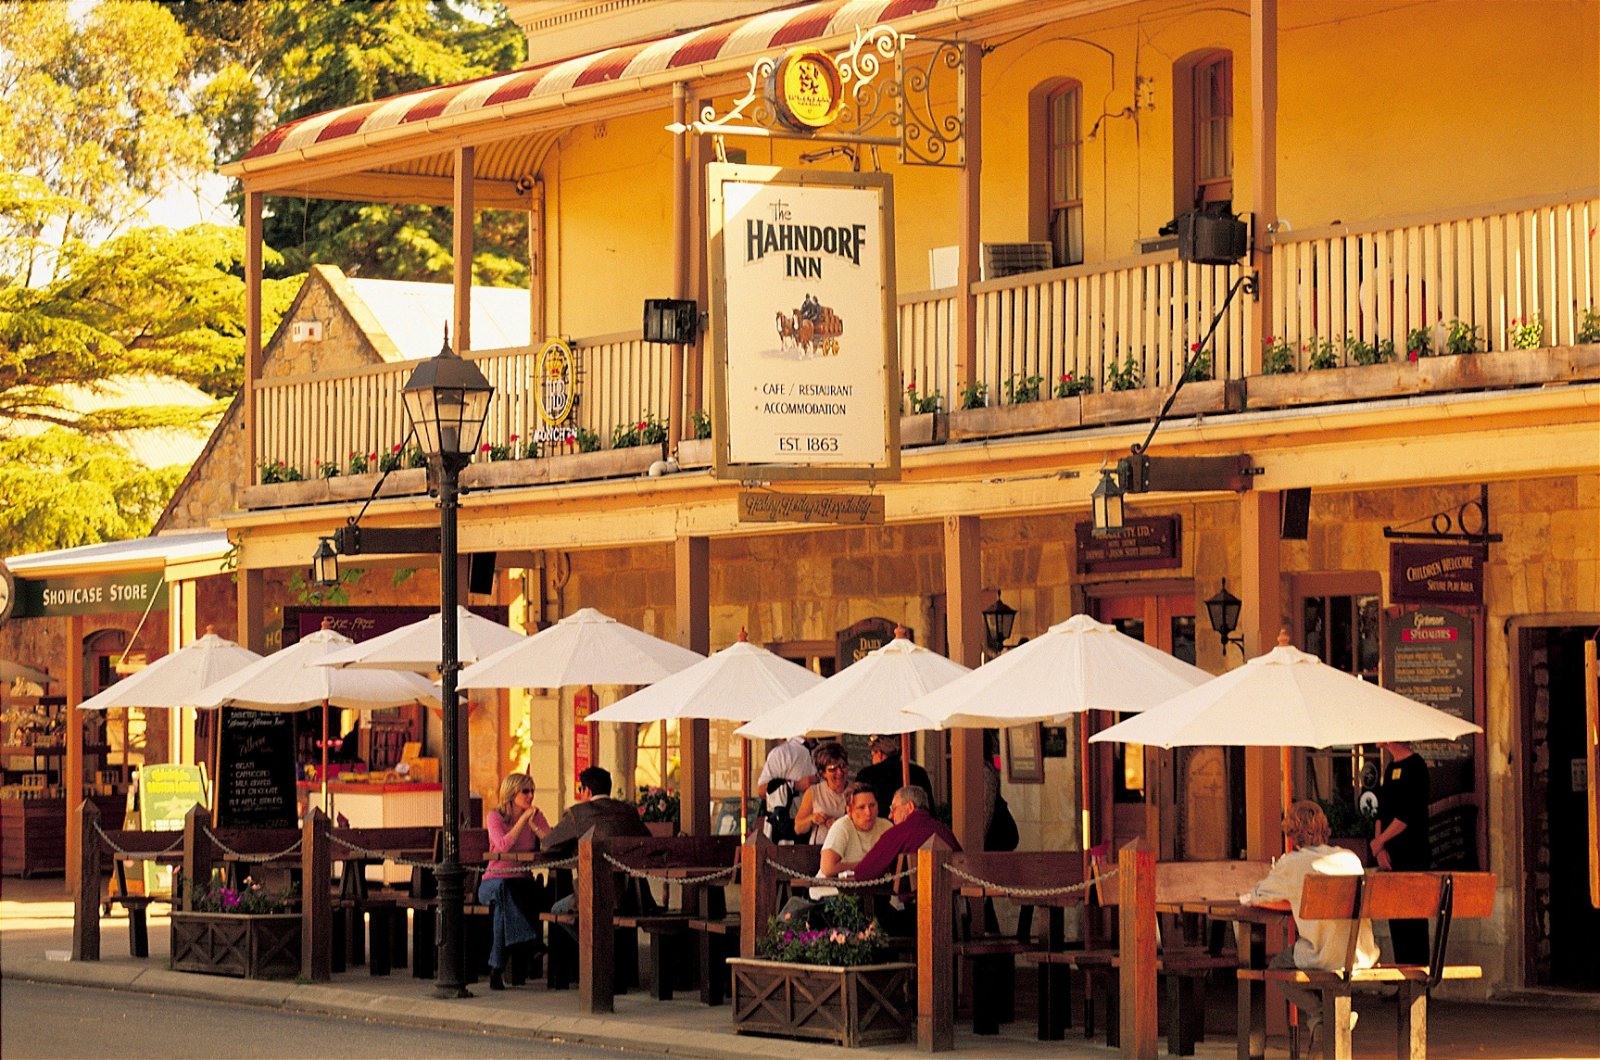 Hahndorf Inn Restaurant - Pubs Sydney